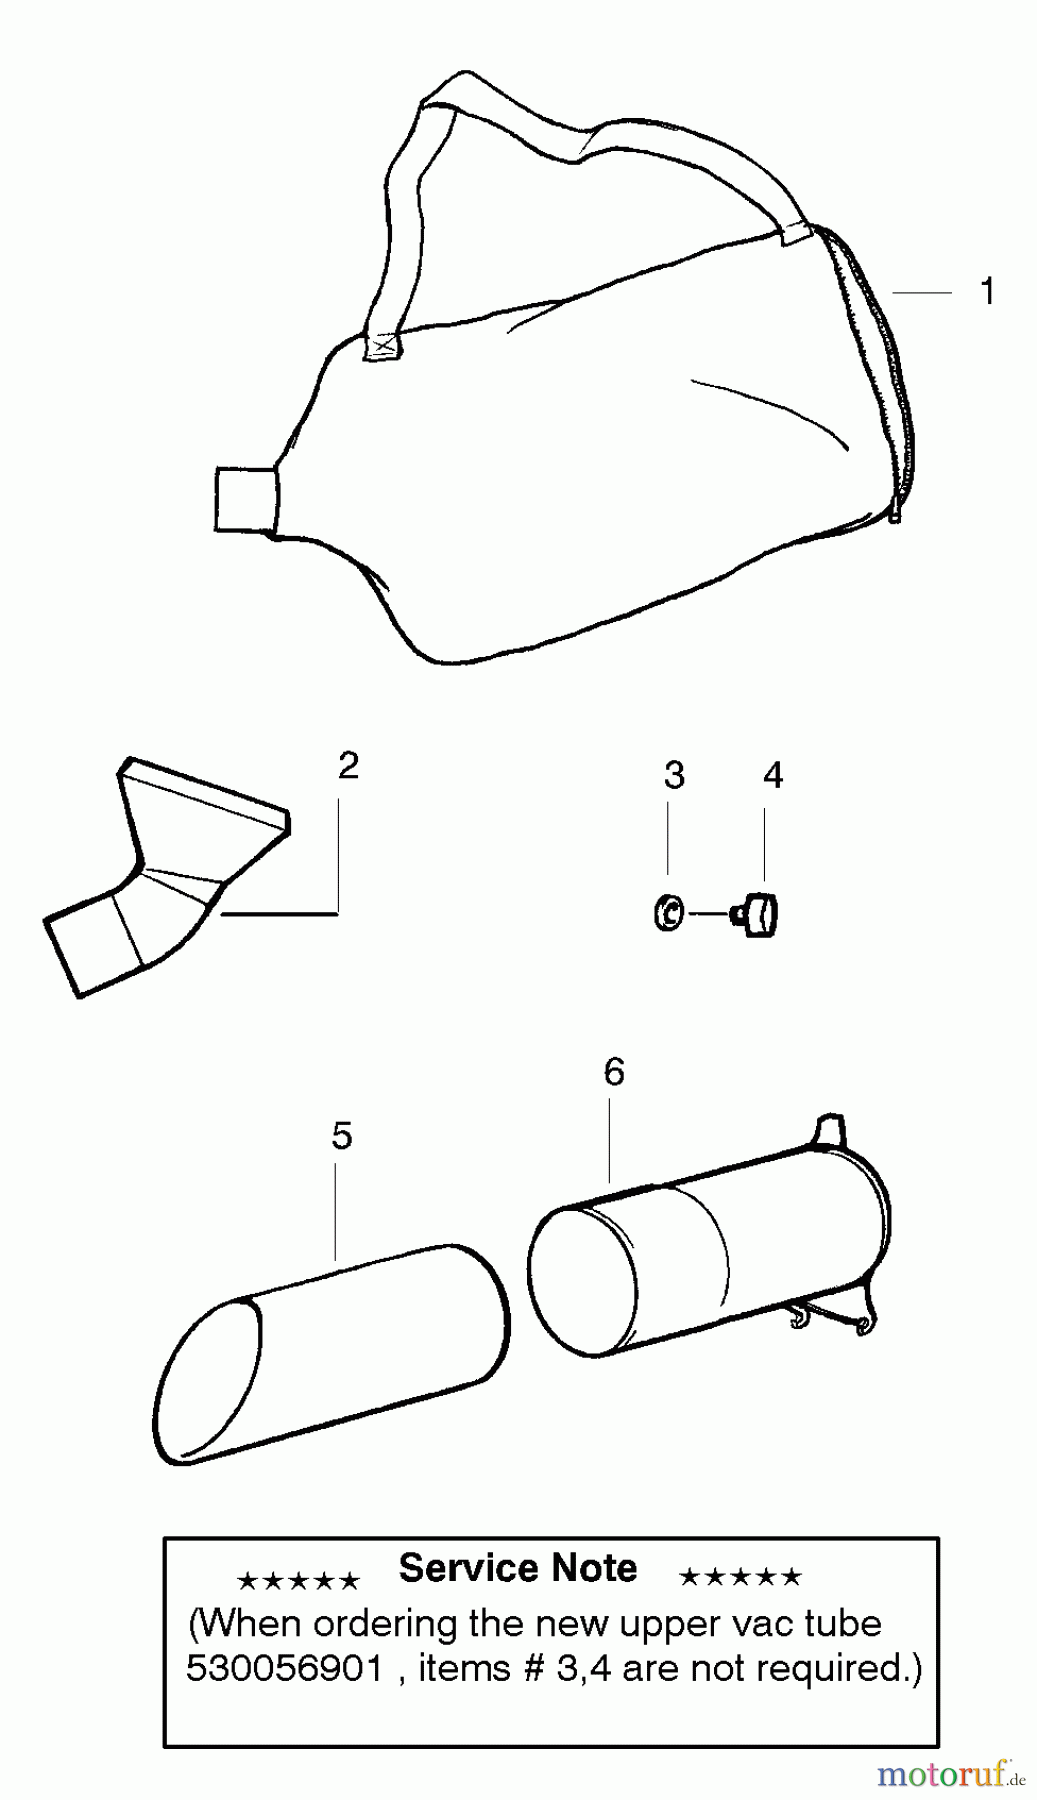  Poulan / Weed Eater Bläser / Sauger / Häcksler / Mulchgeräte BV1650 (Type 1) - Weed Eater Barracuda Blower Vacuum Tube Assembly